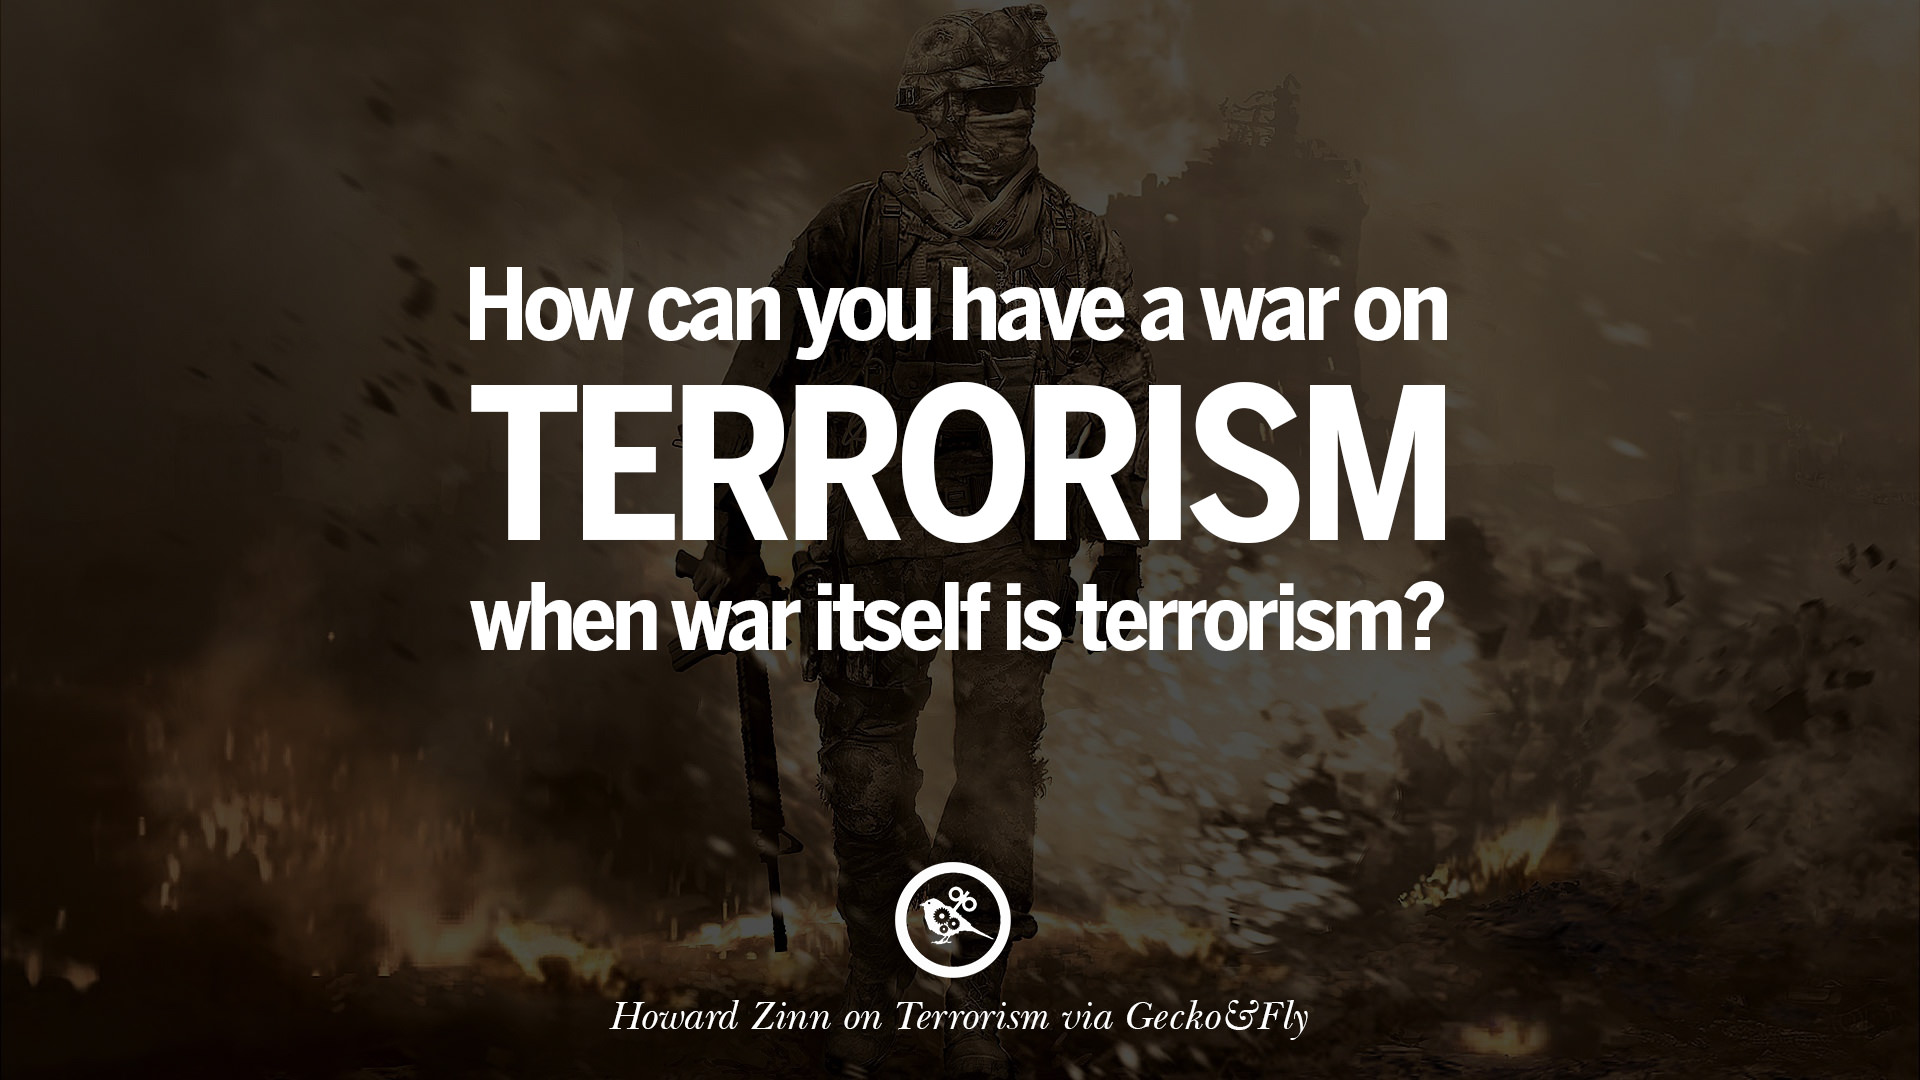 quotations for terrorism essay